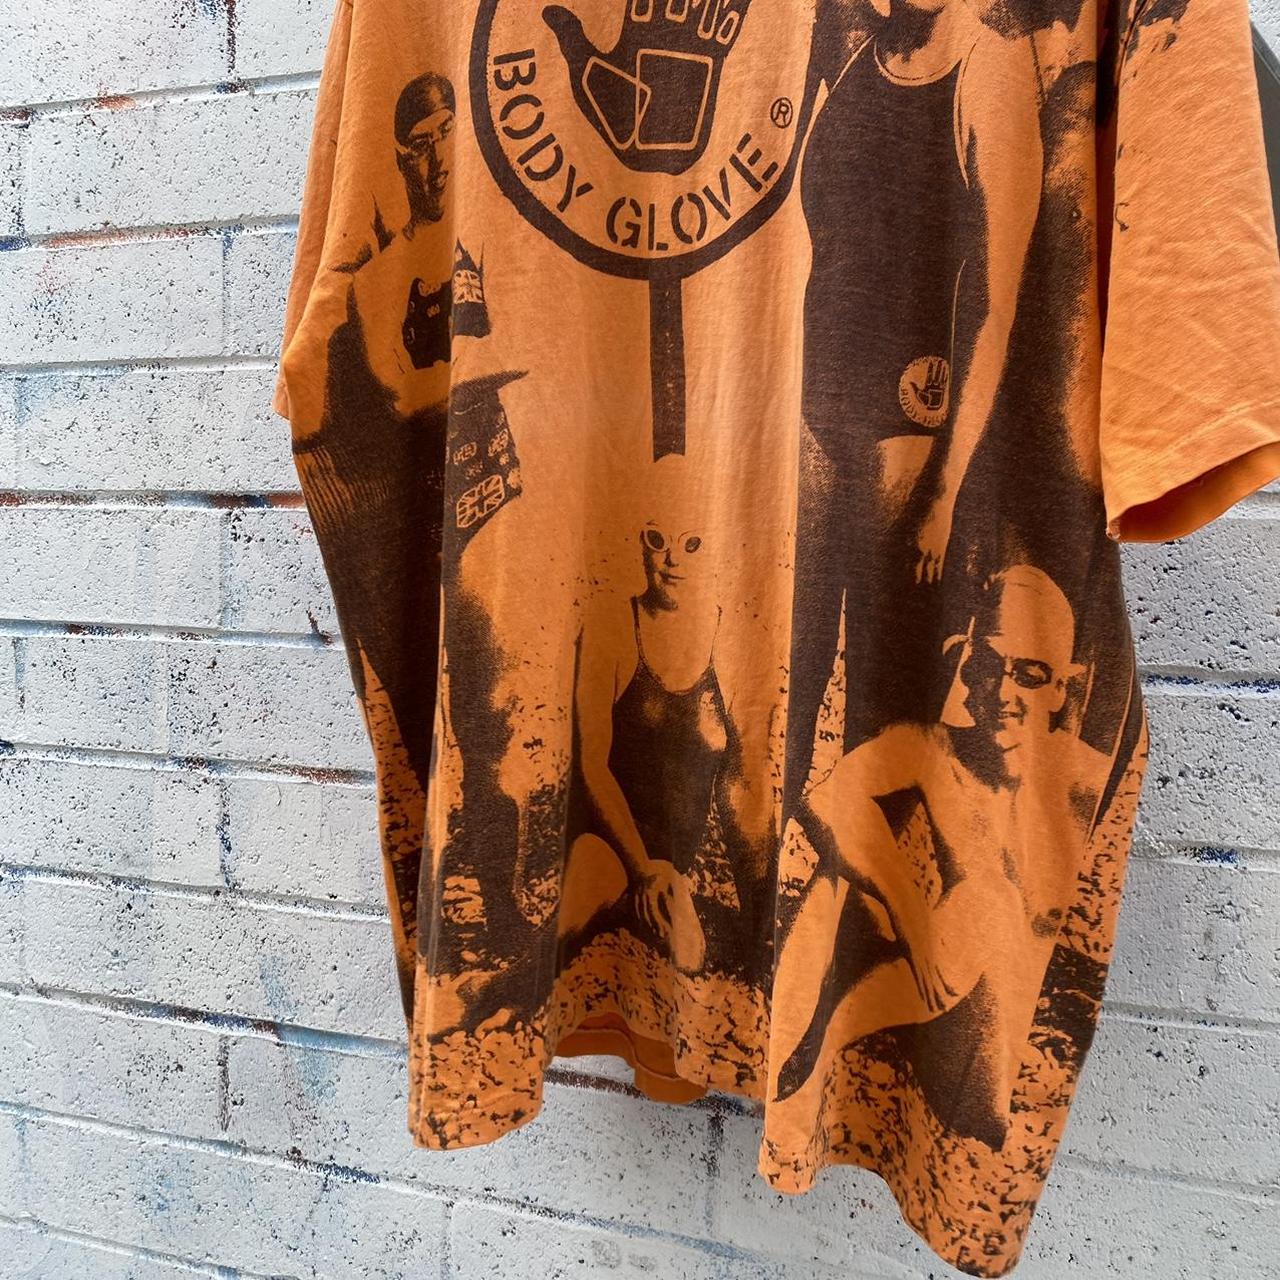 Body Glove Men's Orange T-shirt (6)